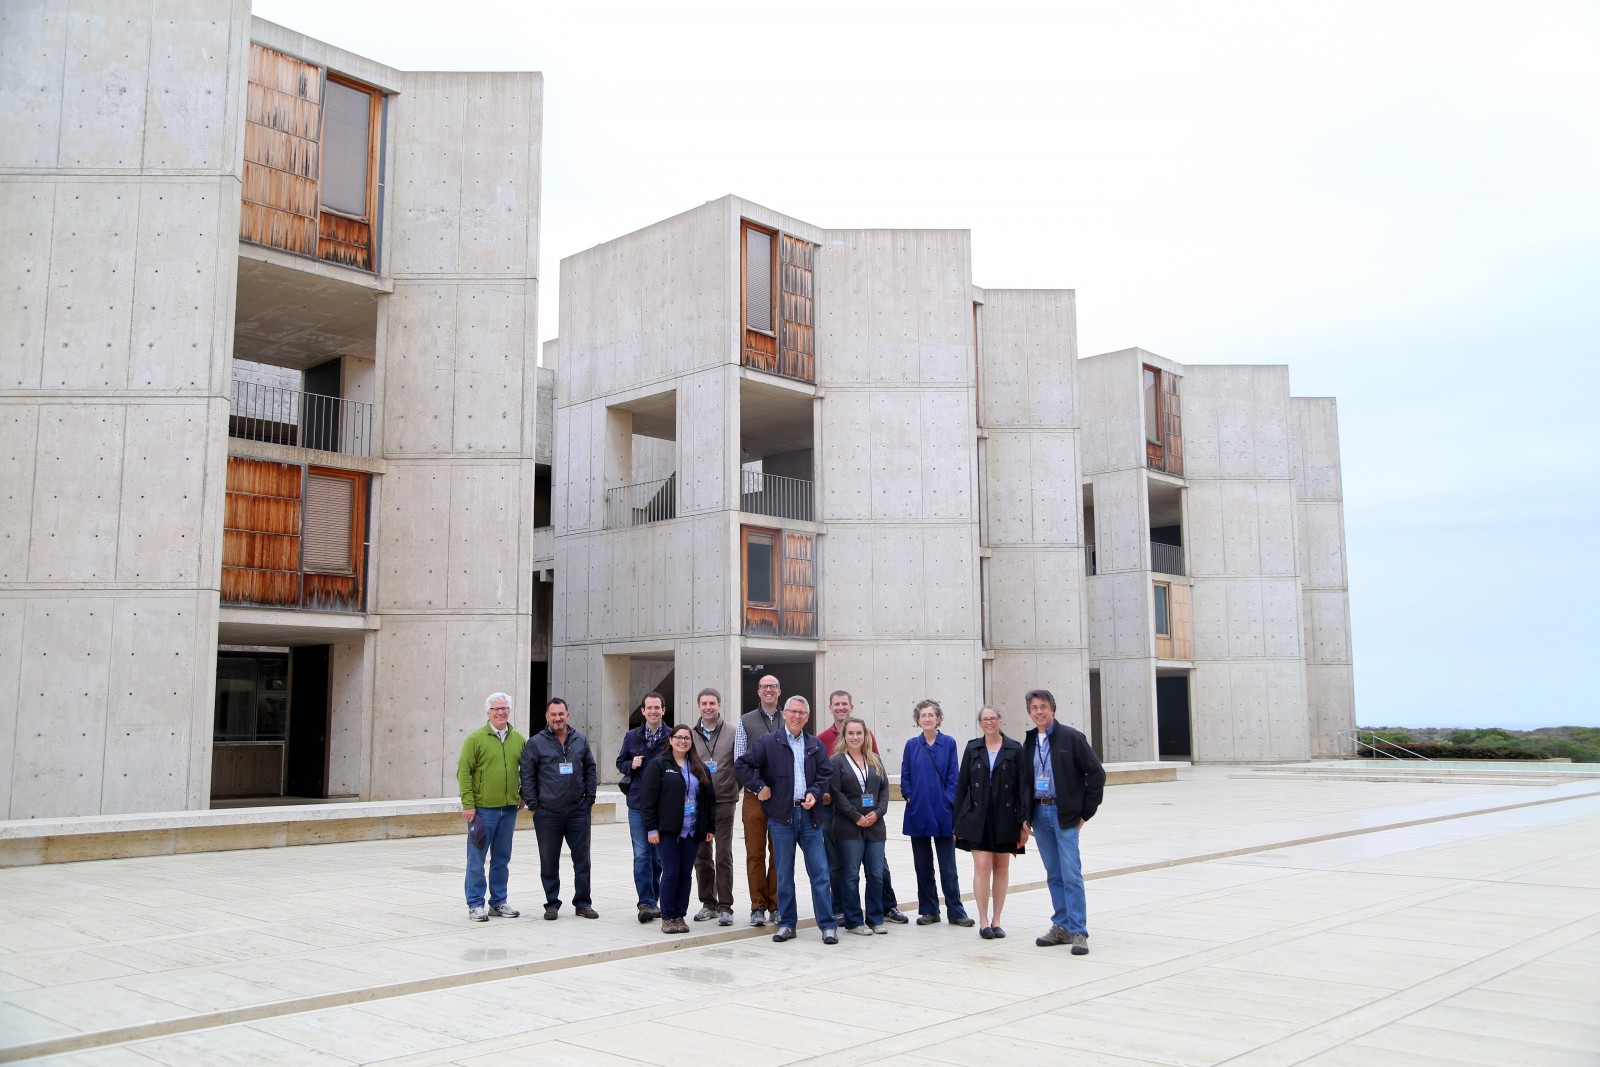 Architecture conservation efforts begin at Salk Institute of